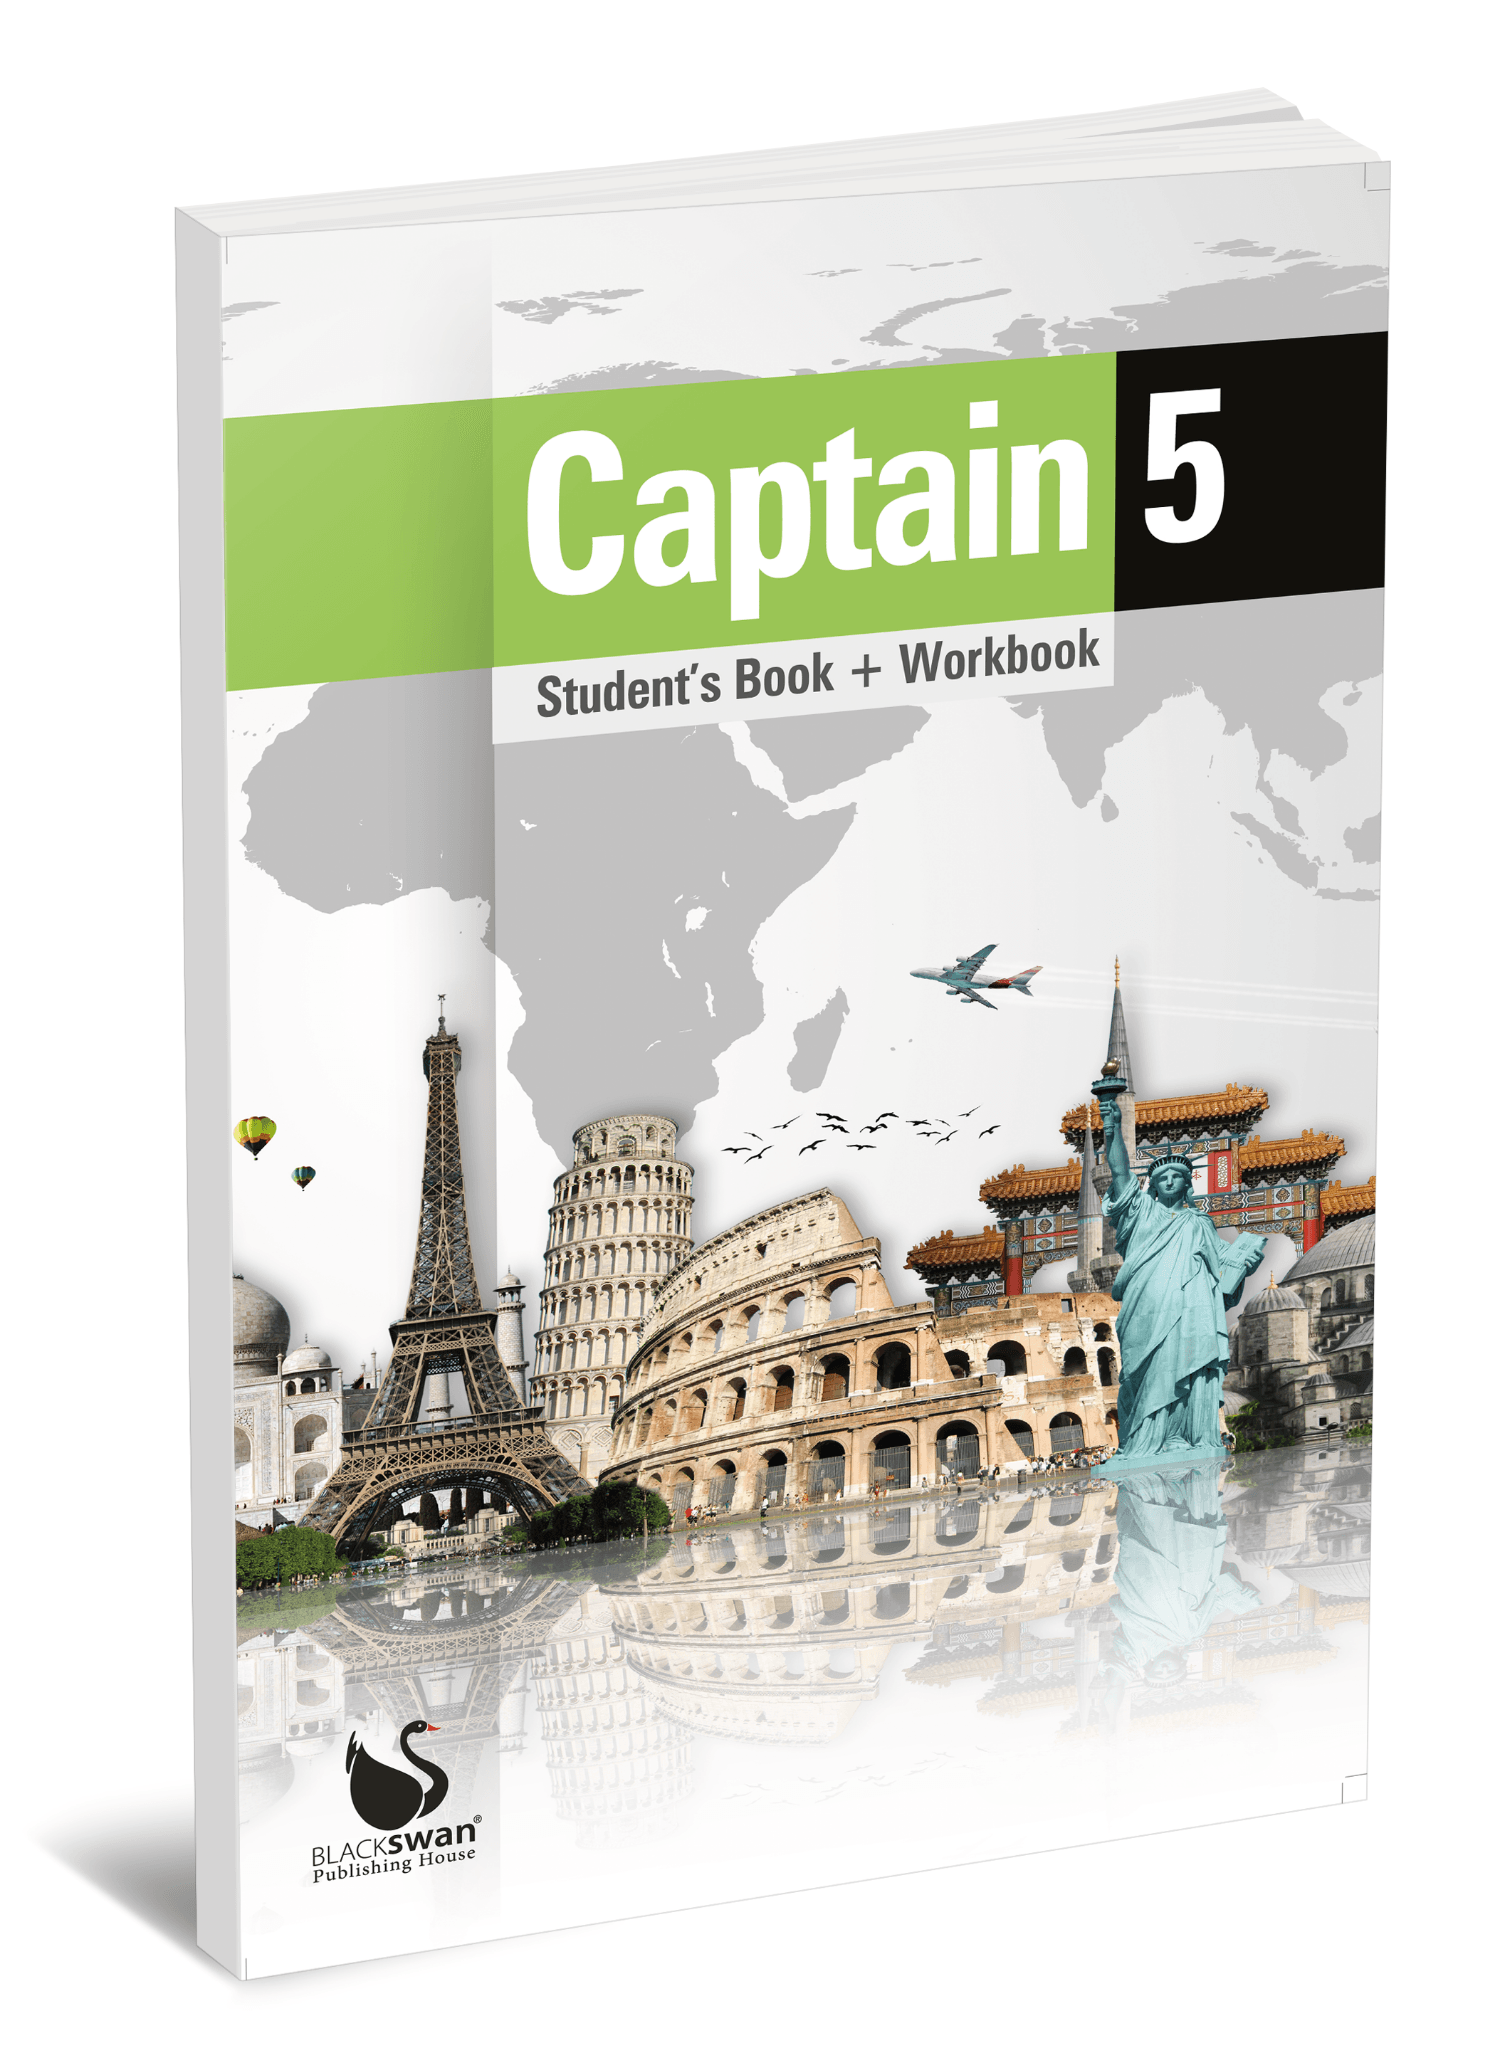 Captain 5 Student’s Book + Workbook